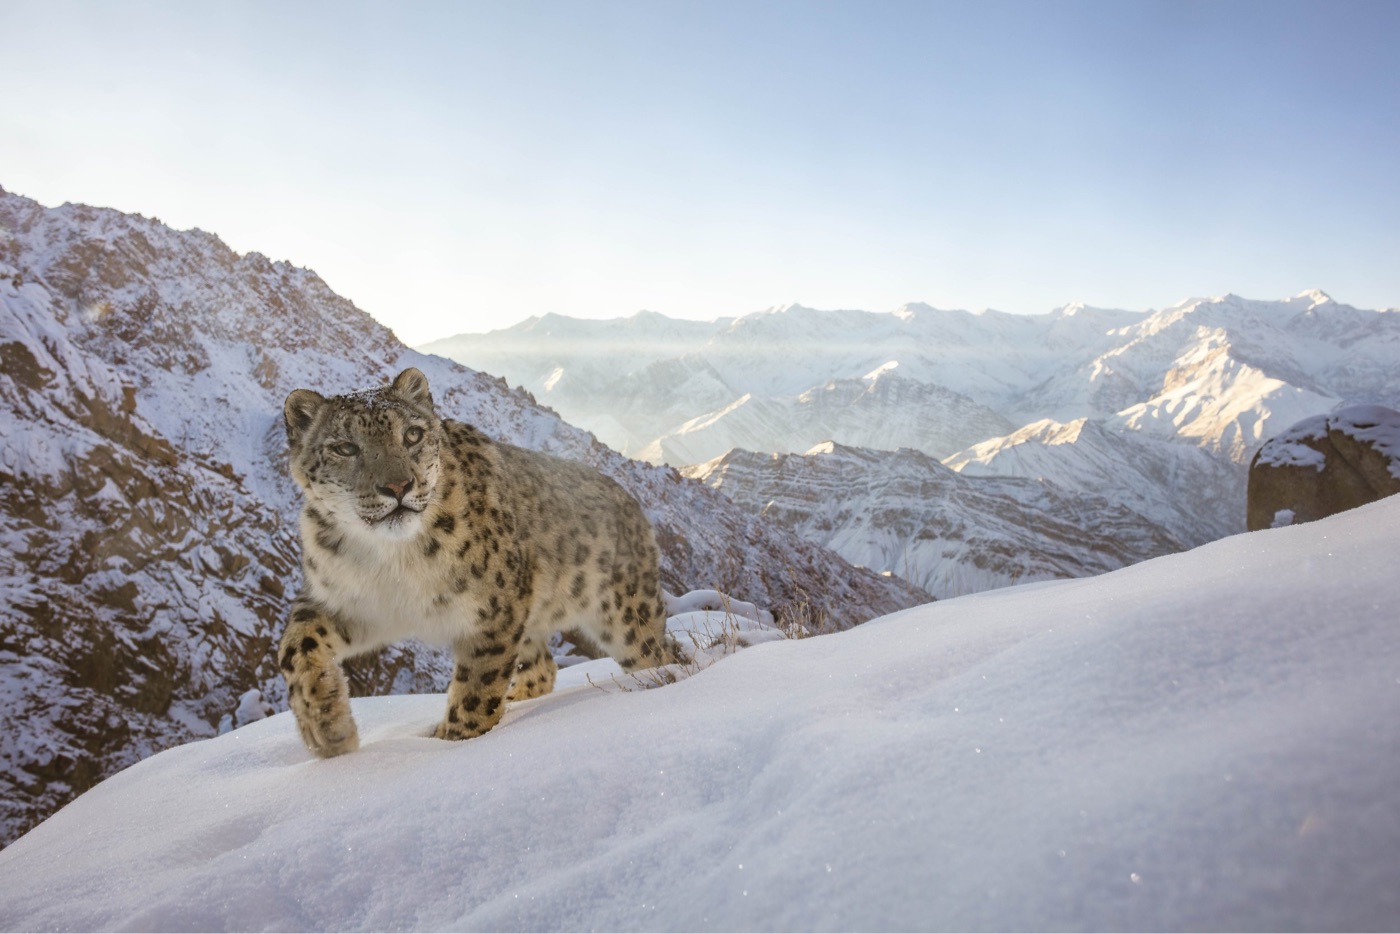 a snow leopard walks on a snowy mountaintop